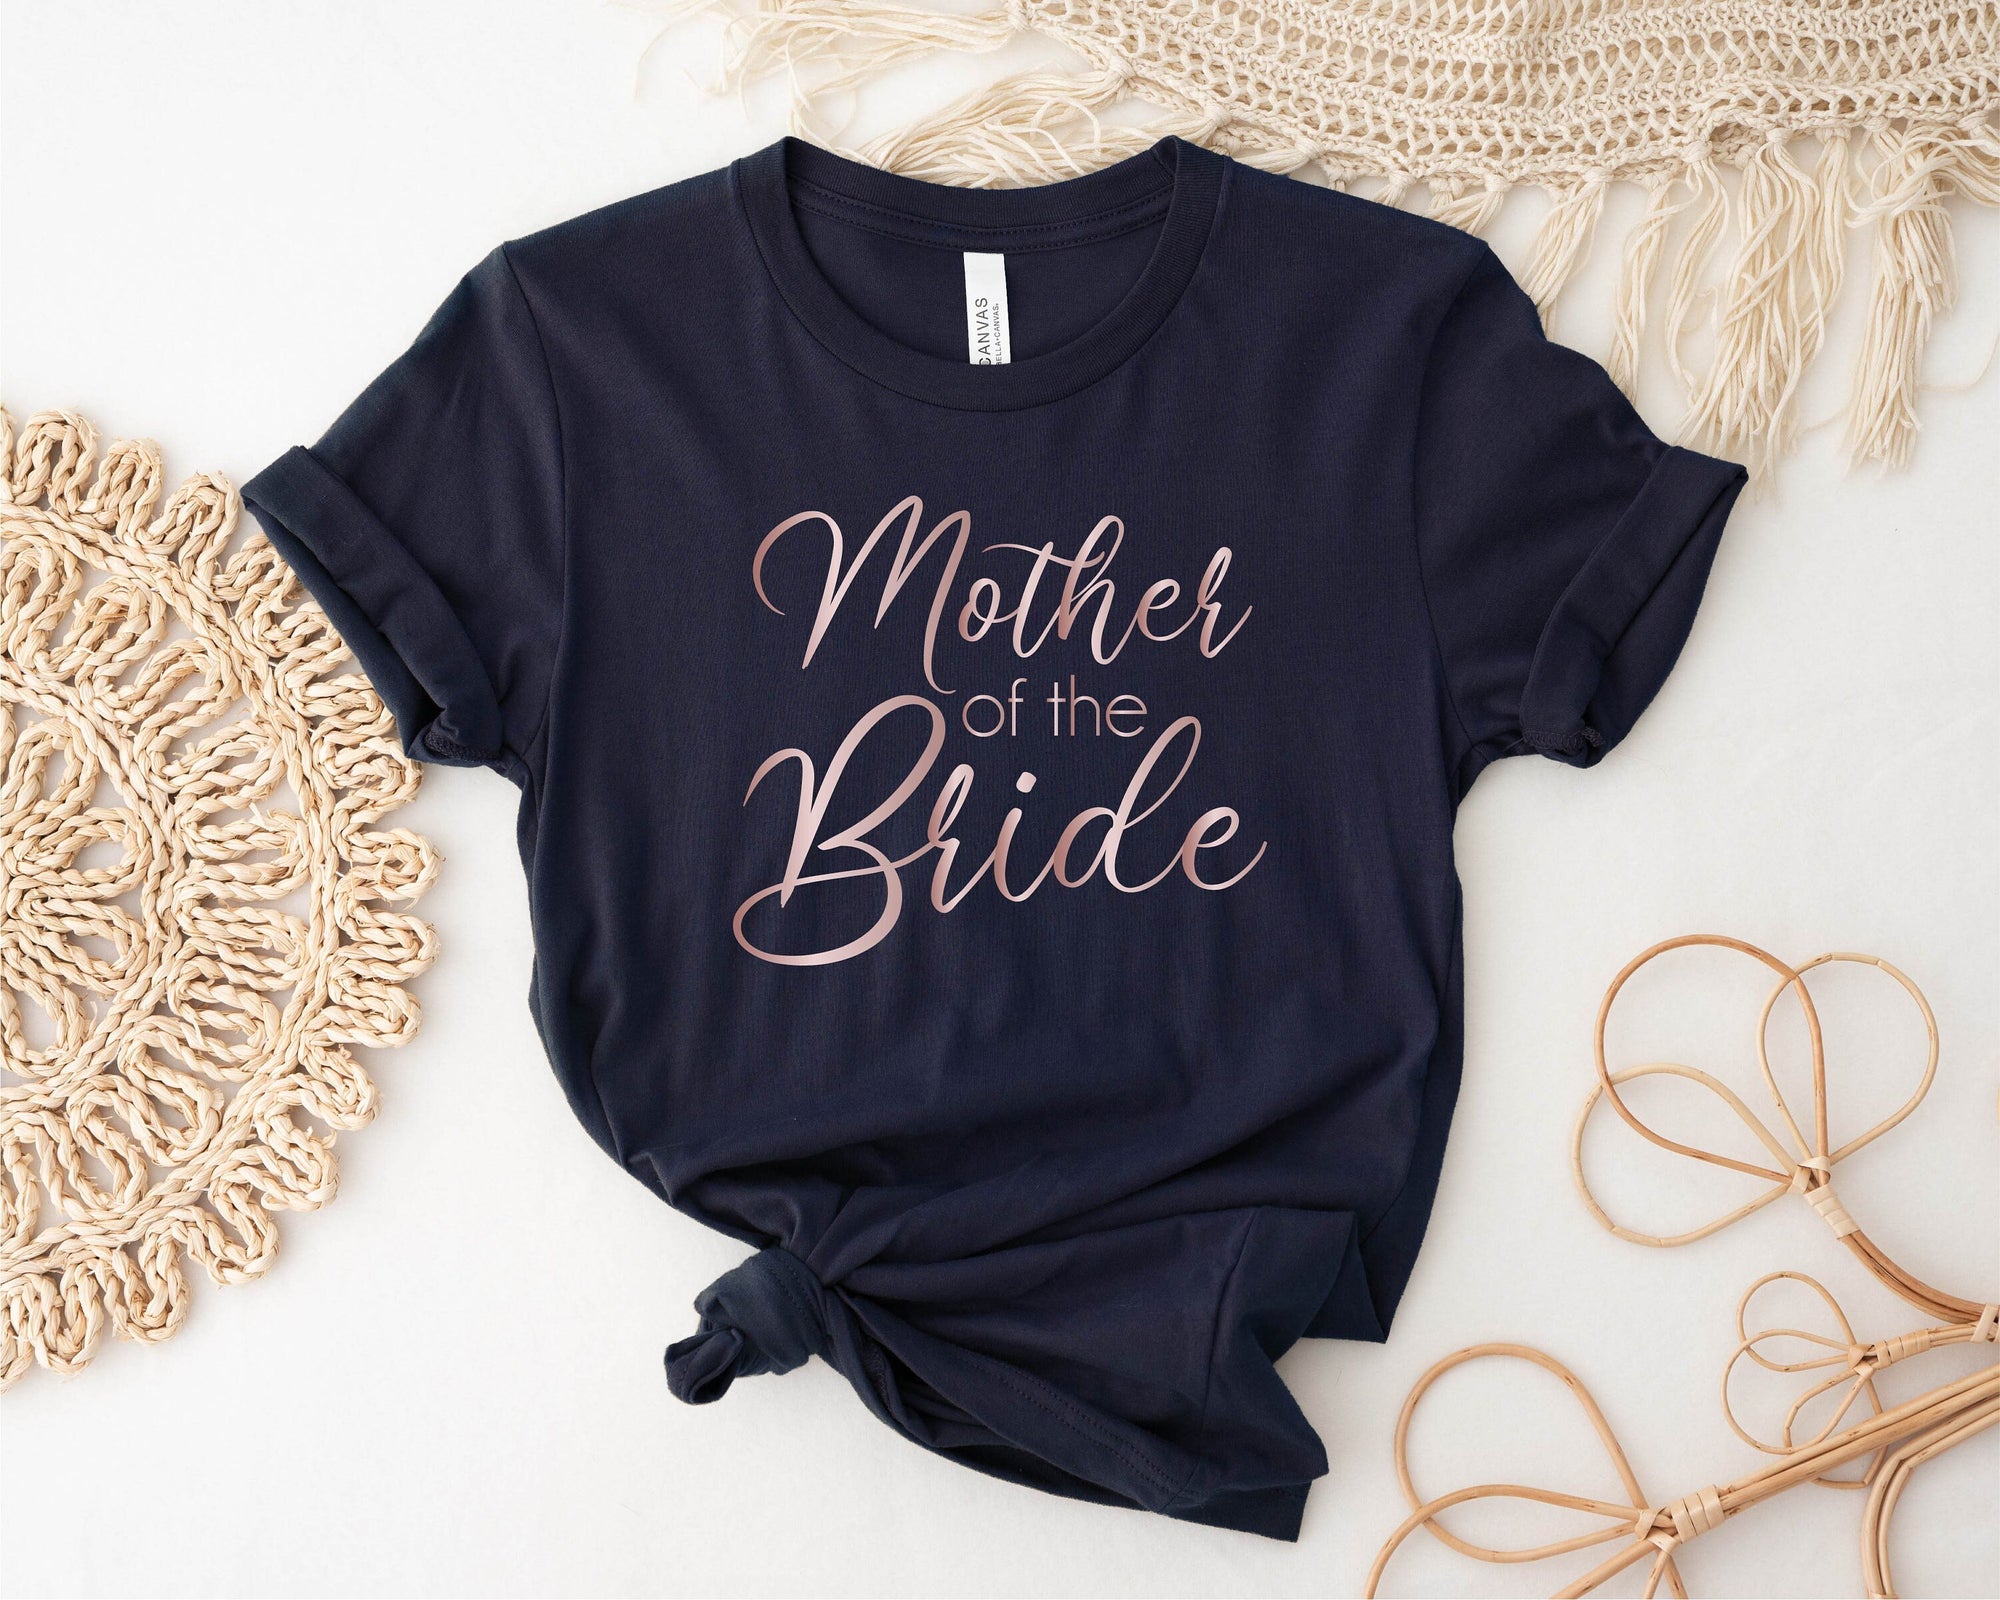 Mother of the Bride Women's T-Shirt, Wedding Gift, Wedding Party, His & Hers, Bride Tee, Mother of the Bride T-Shirt, Bridal Party Tee, NAVY